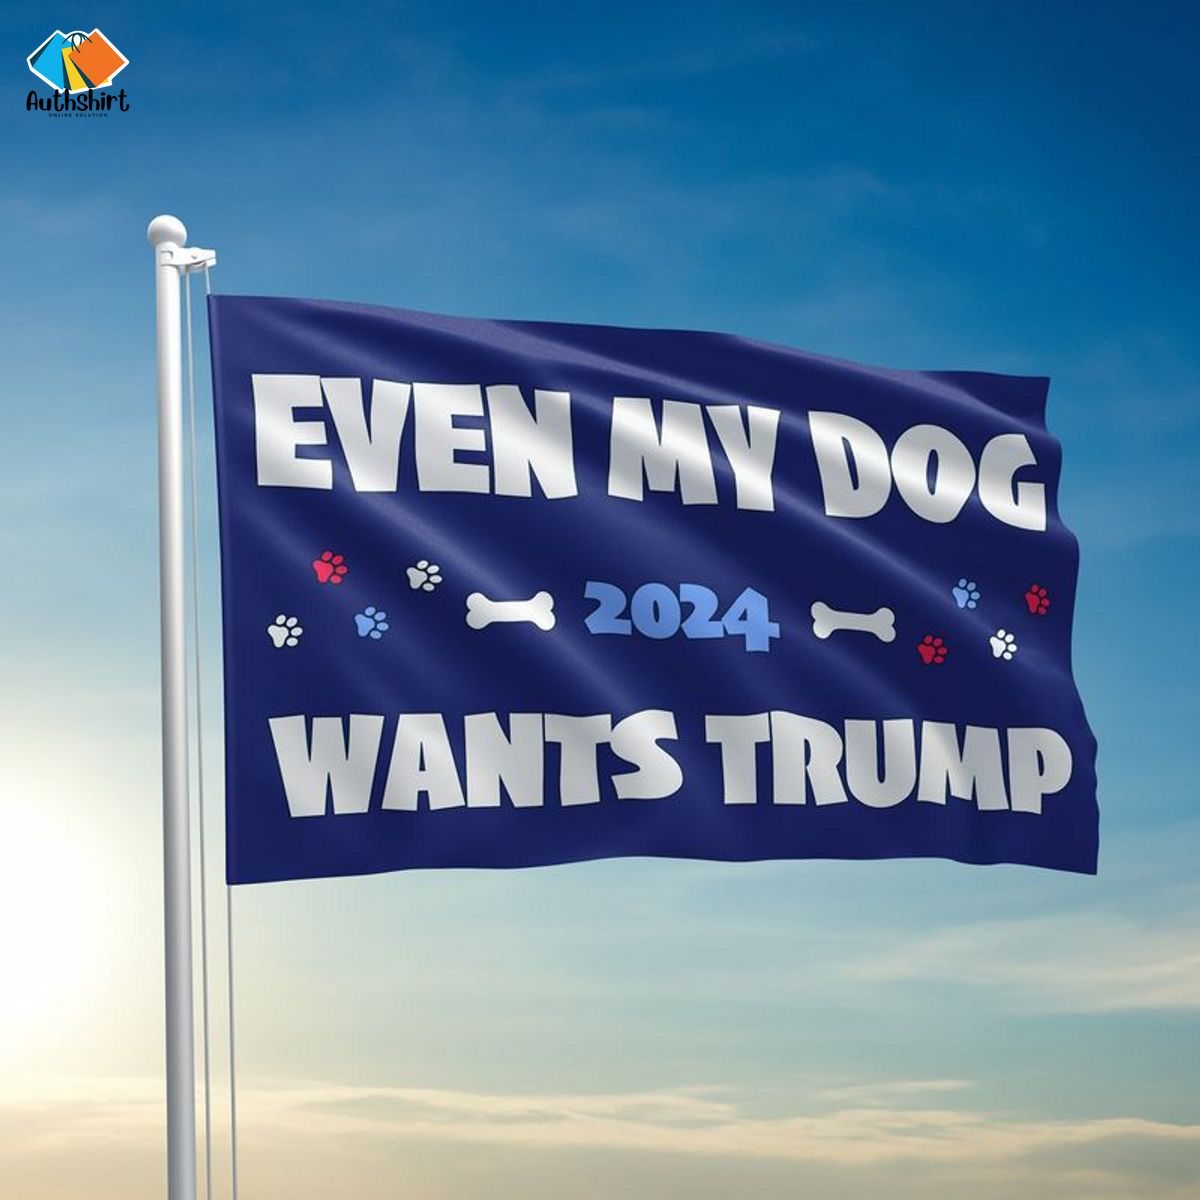 Even My Dog Wants Trump 2024 Flag